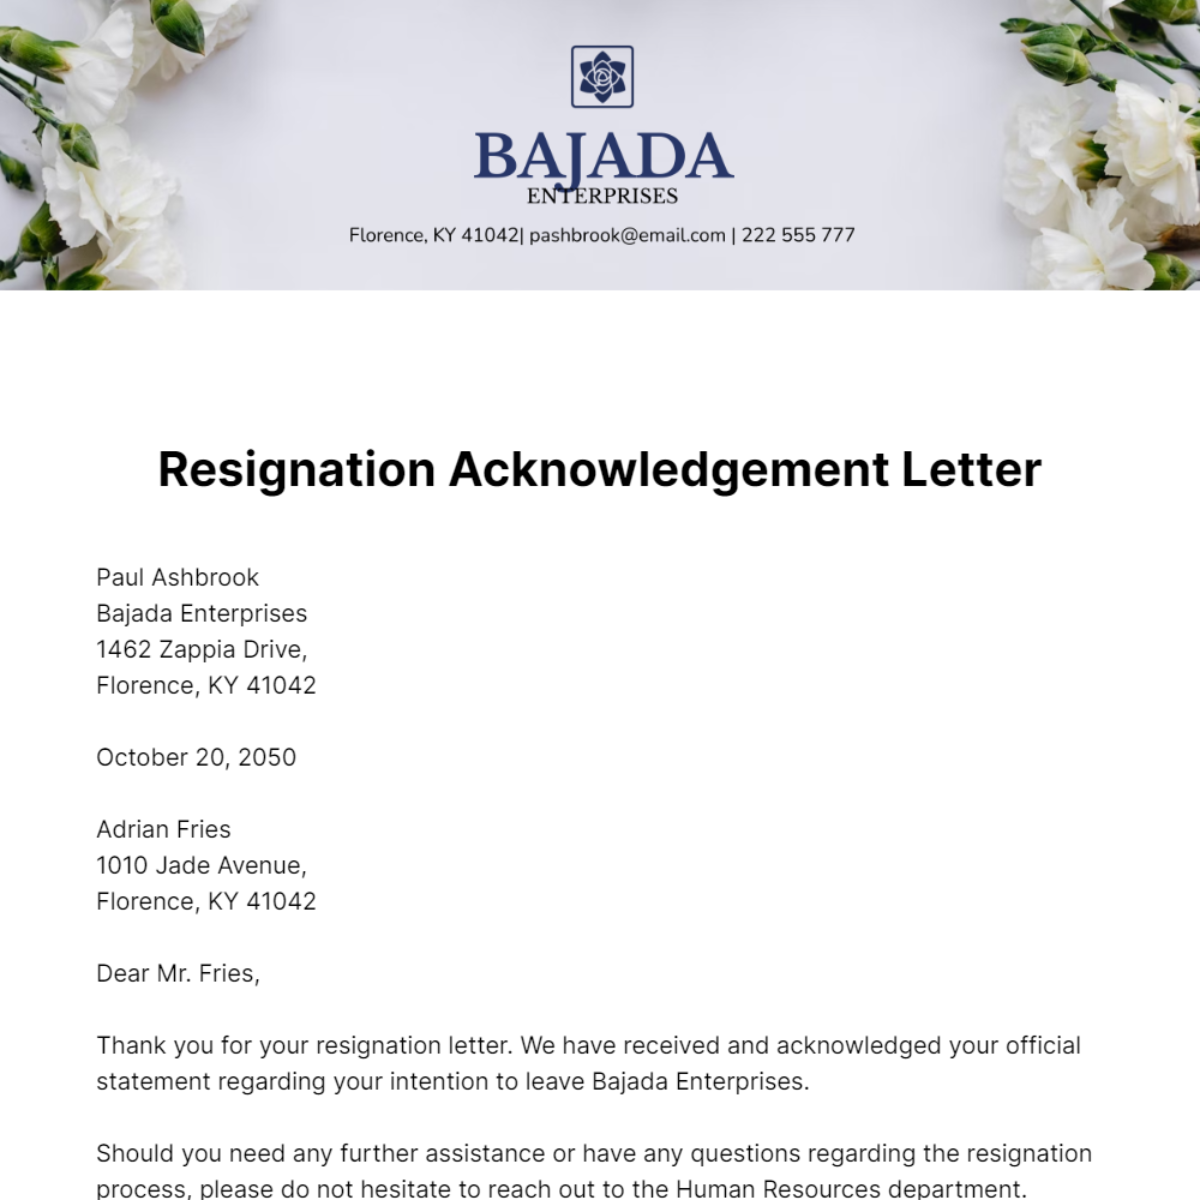 Resignation Acknowledgement Letter   Template